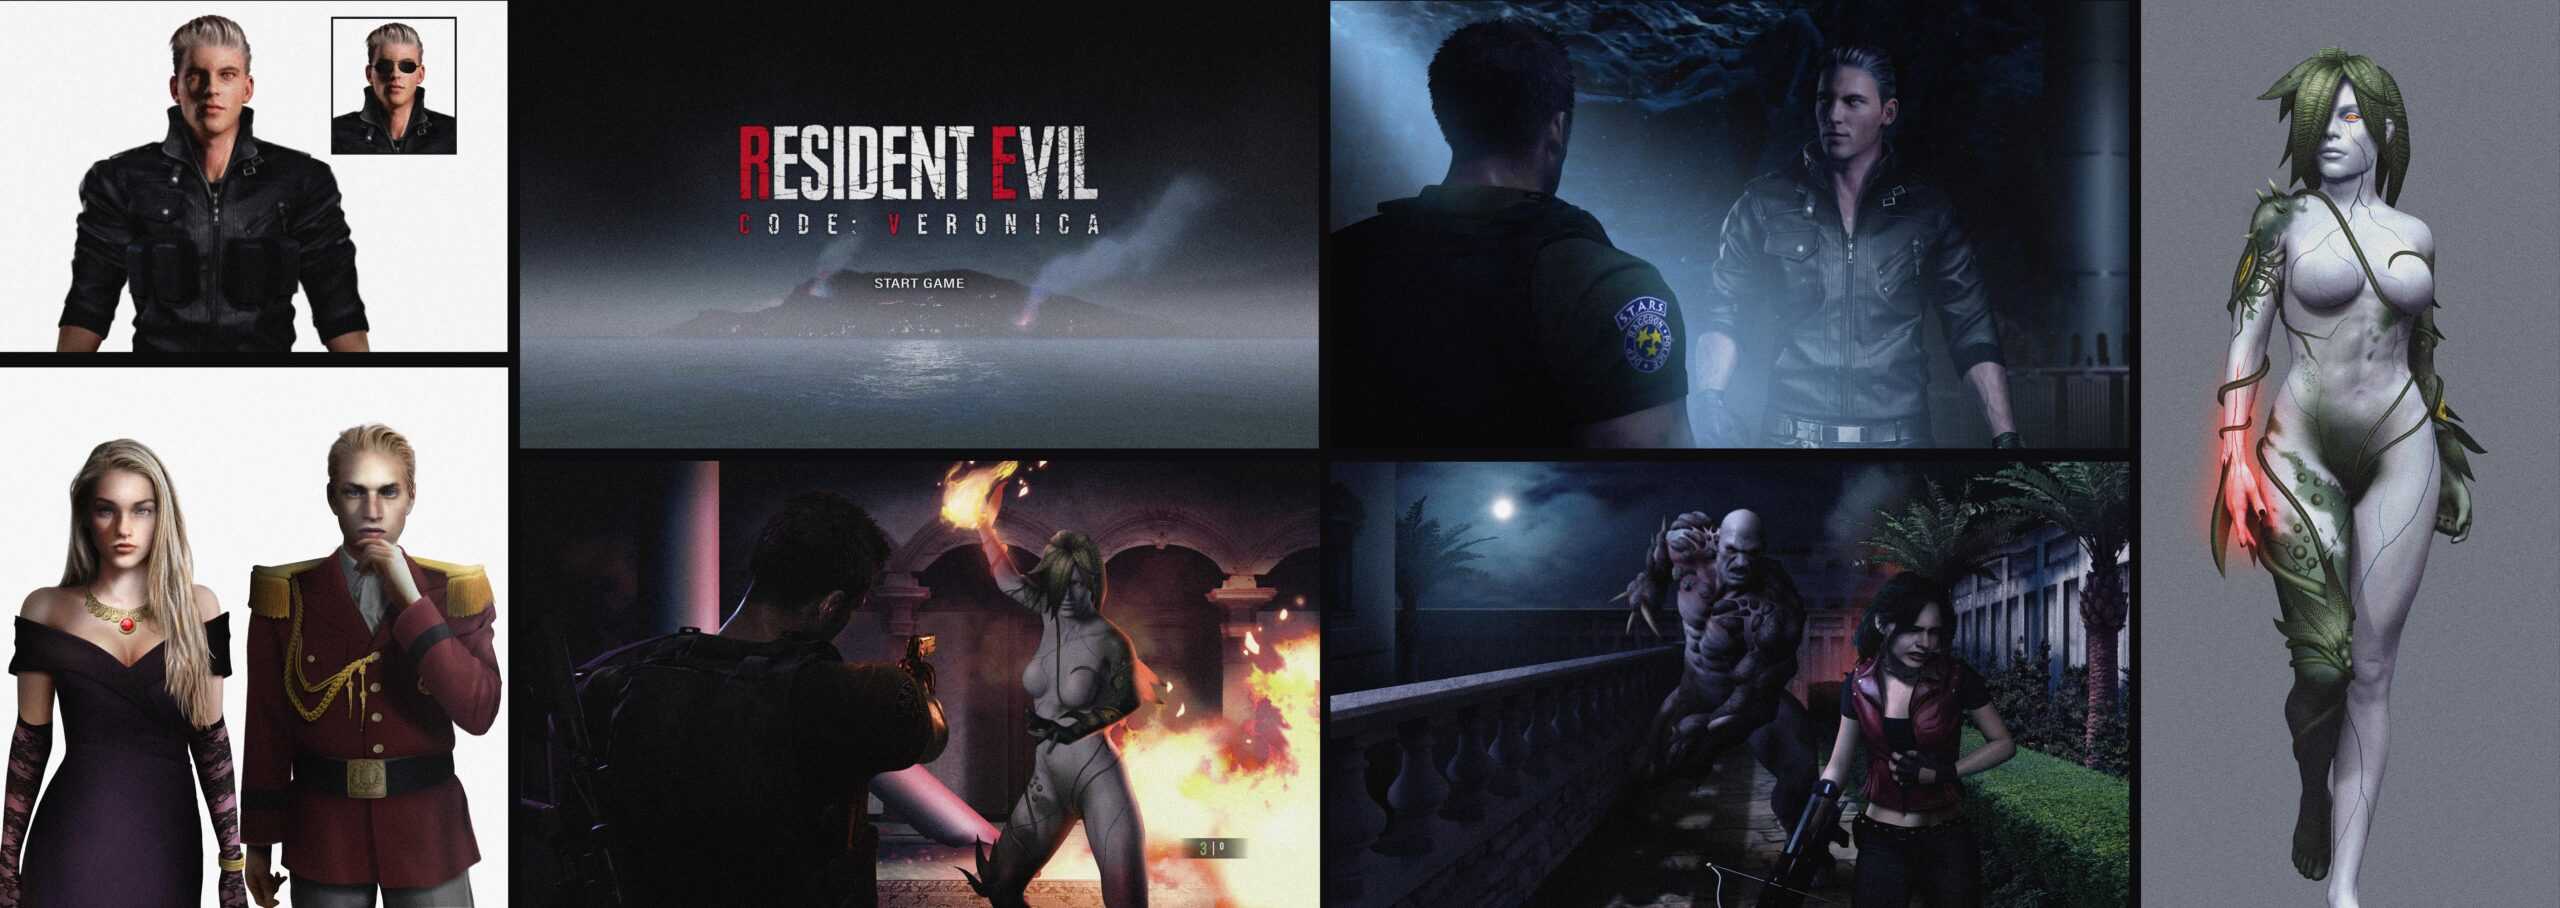 Resident evil 2 remake коды оранжереи головоломка гербицид